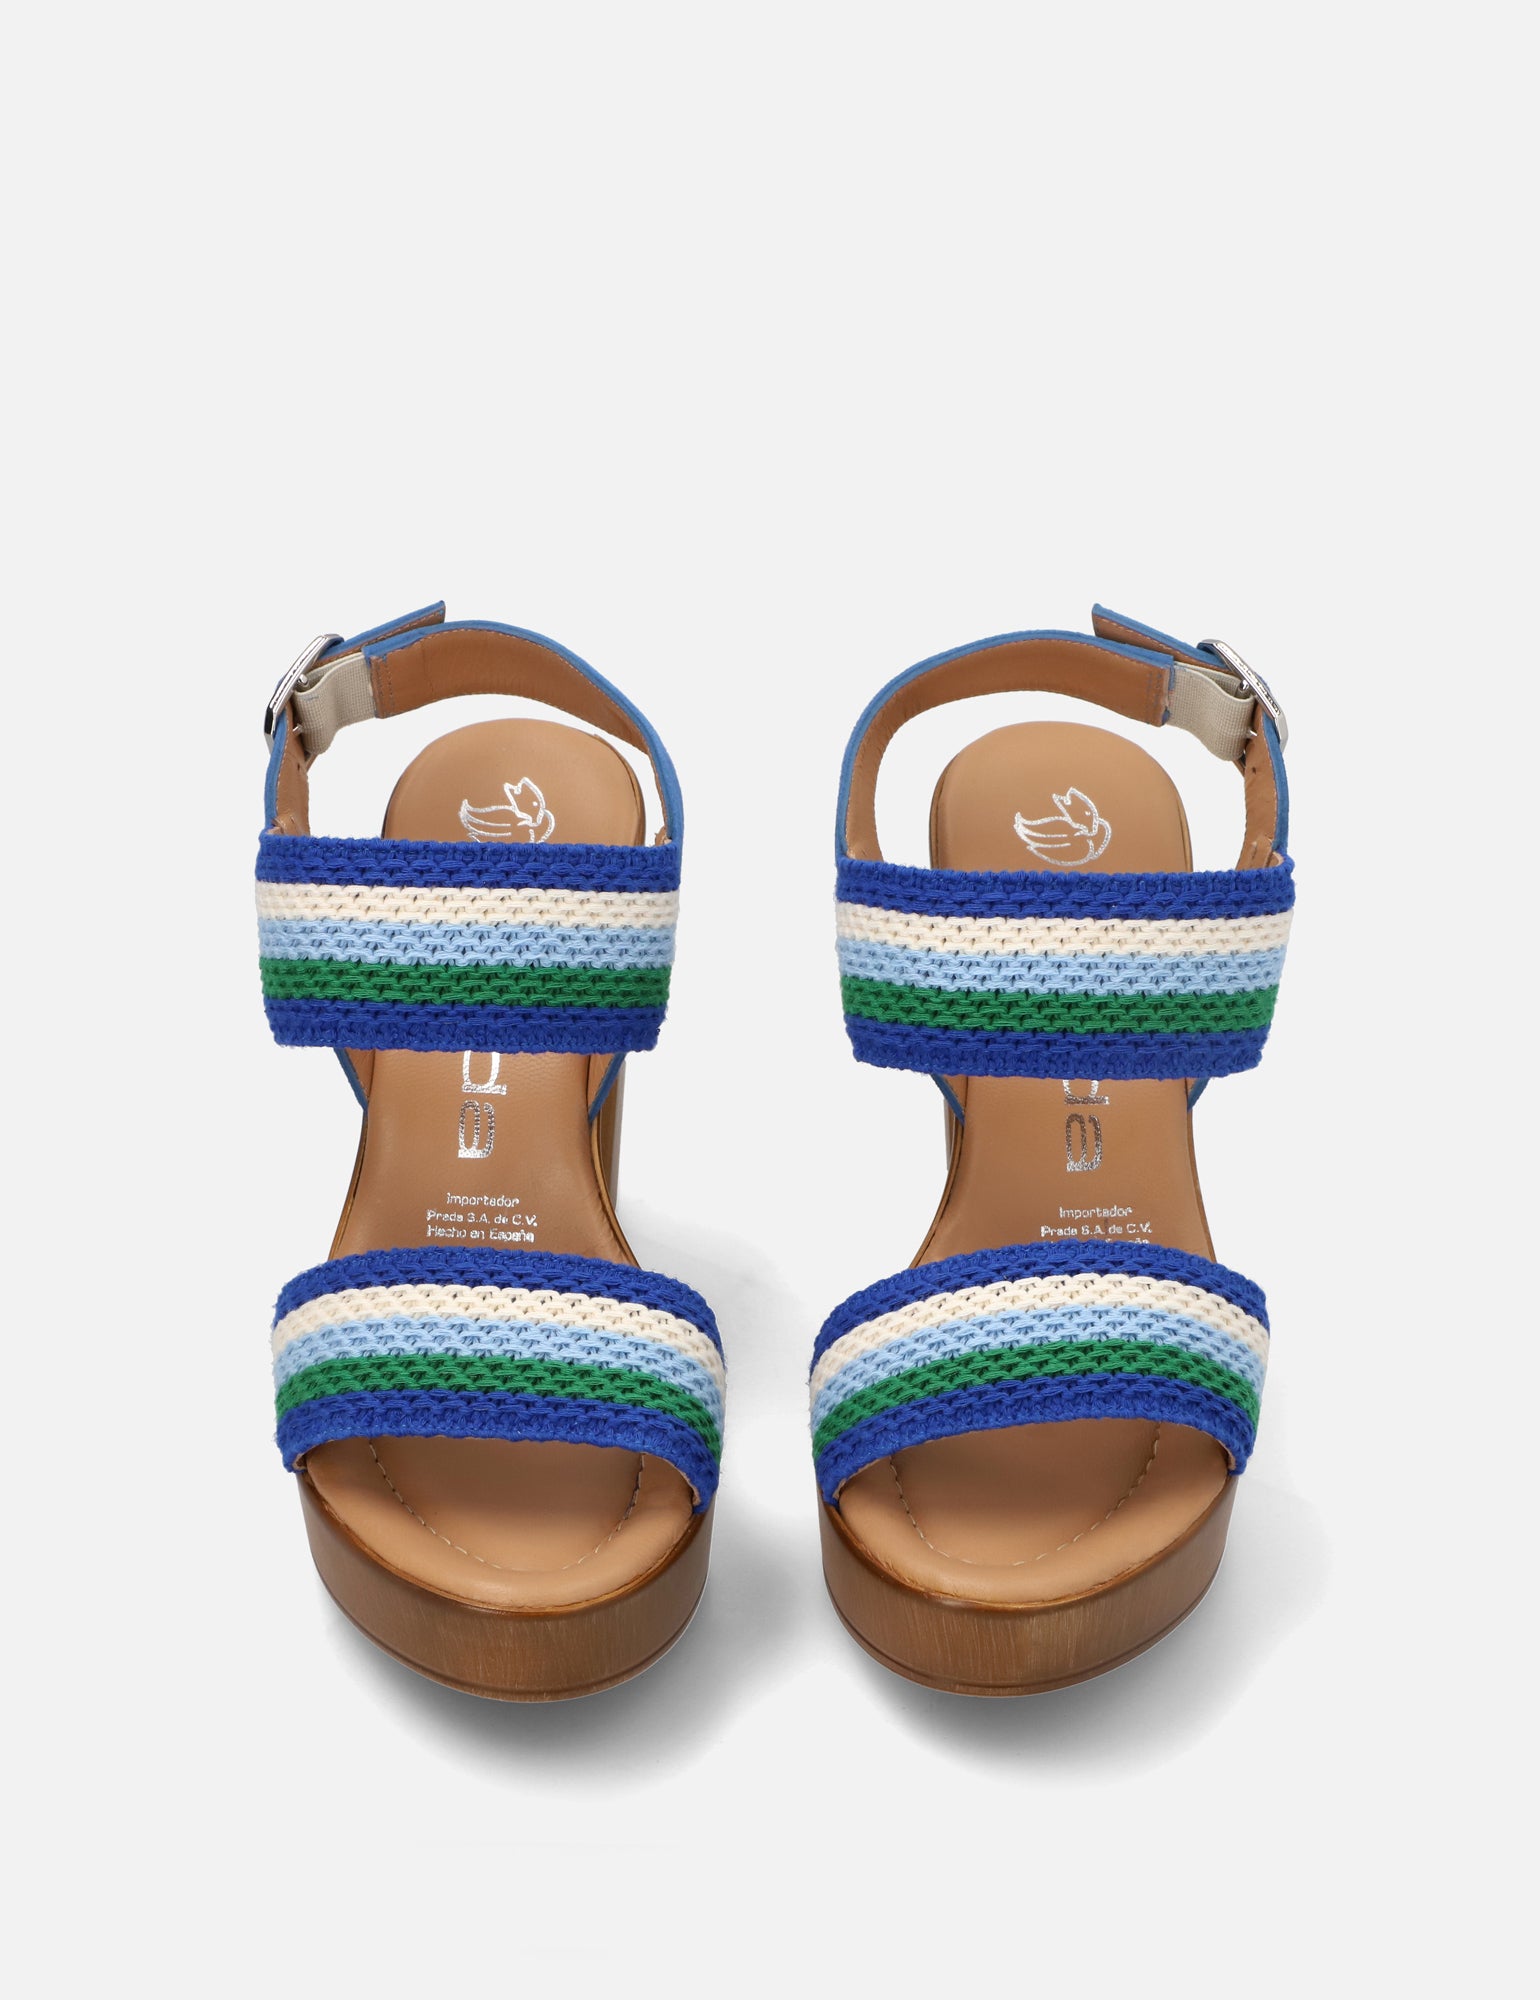 Sandalia con tiras apariencia crochet azul